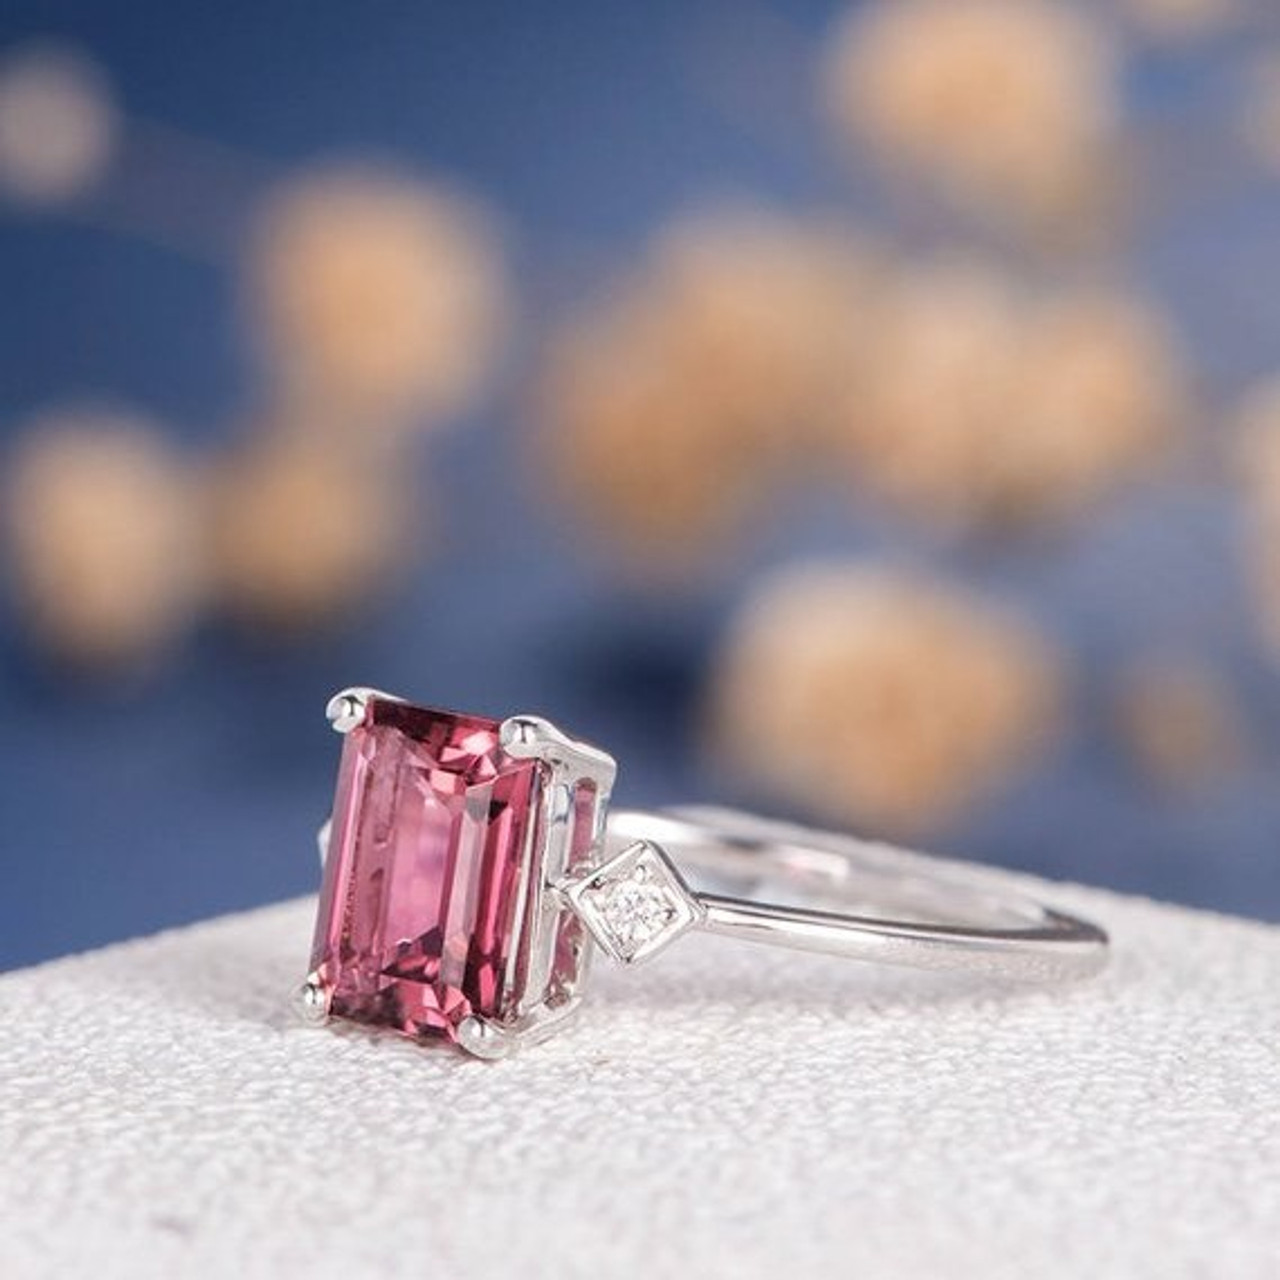 Engagement Rings | Engagement Rings Melbourne | Diamond Rings